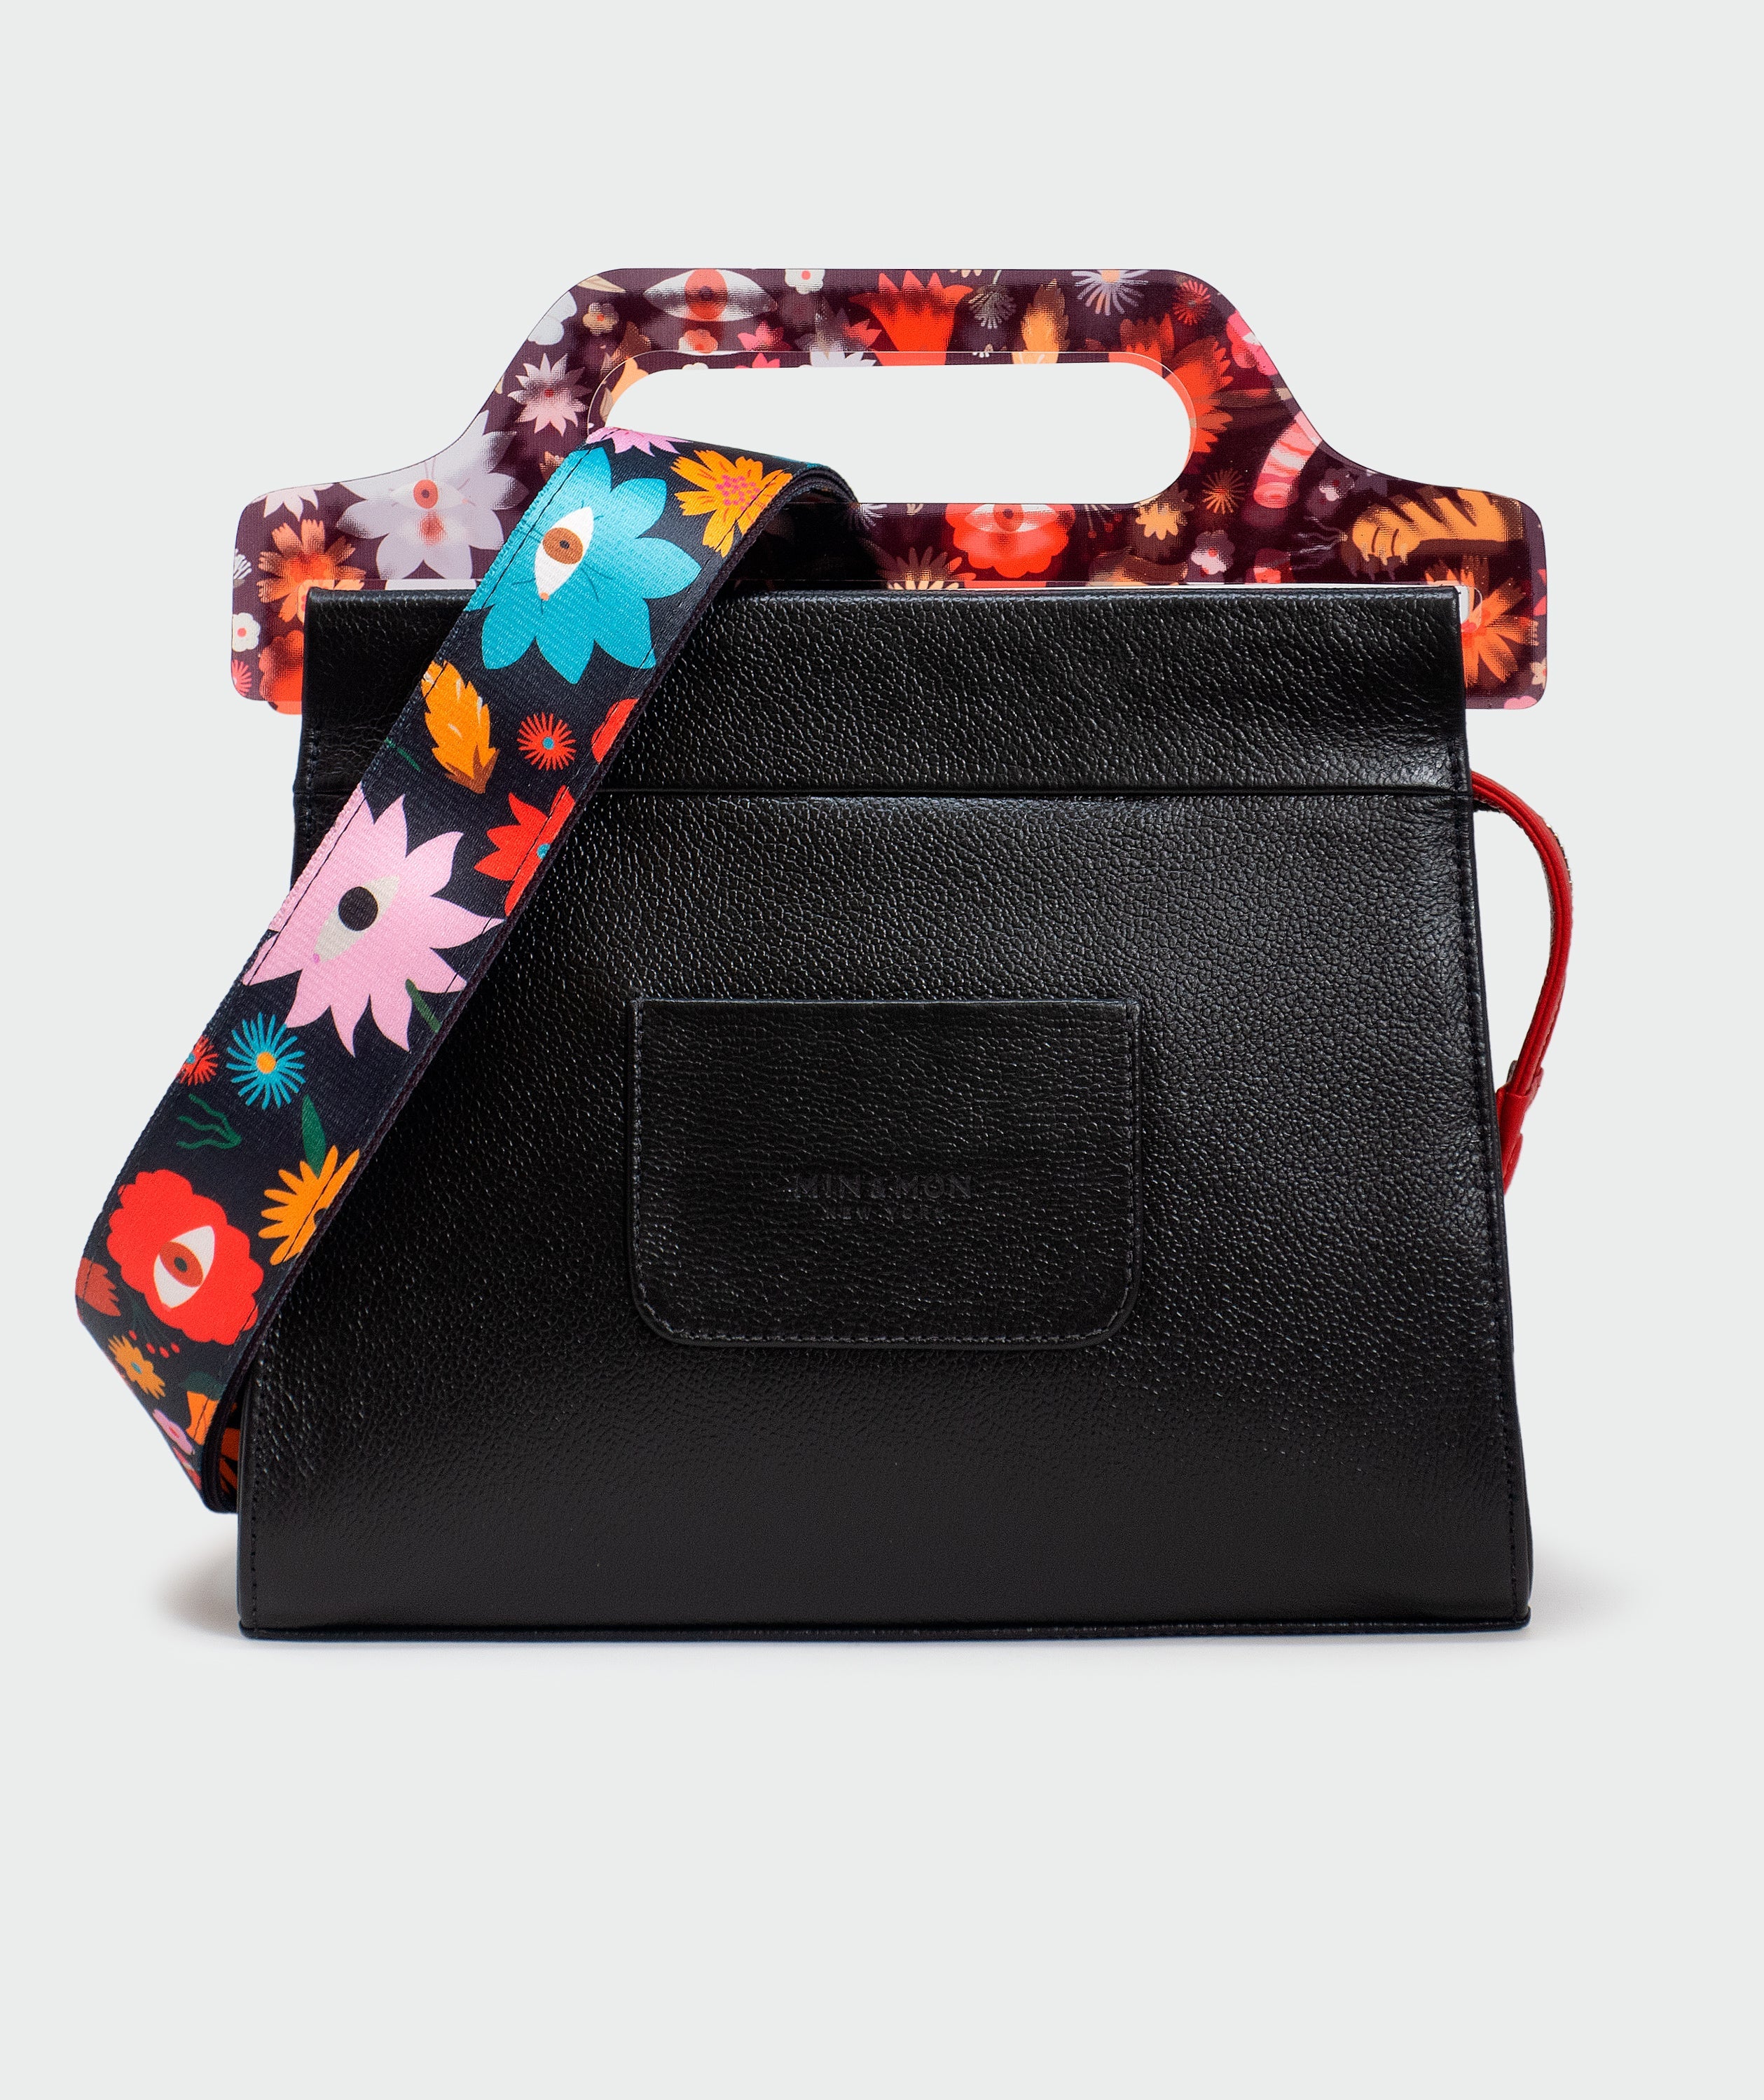 Vali Black Leather Crossbody Handbag Plastic Handle - Tiger And Snake Print - Back view